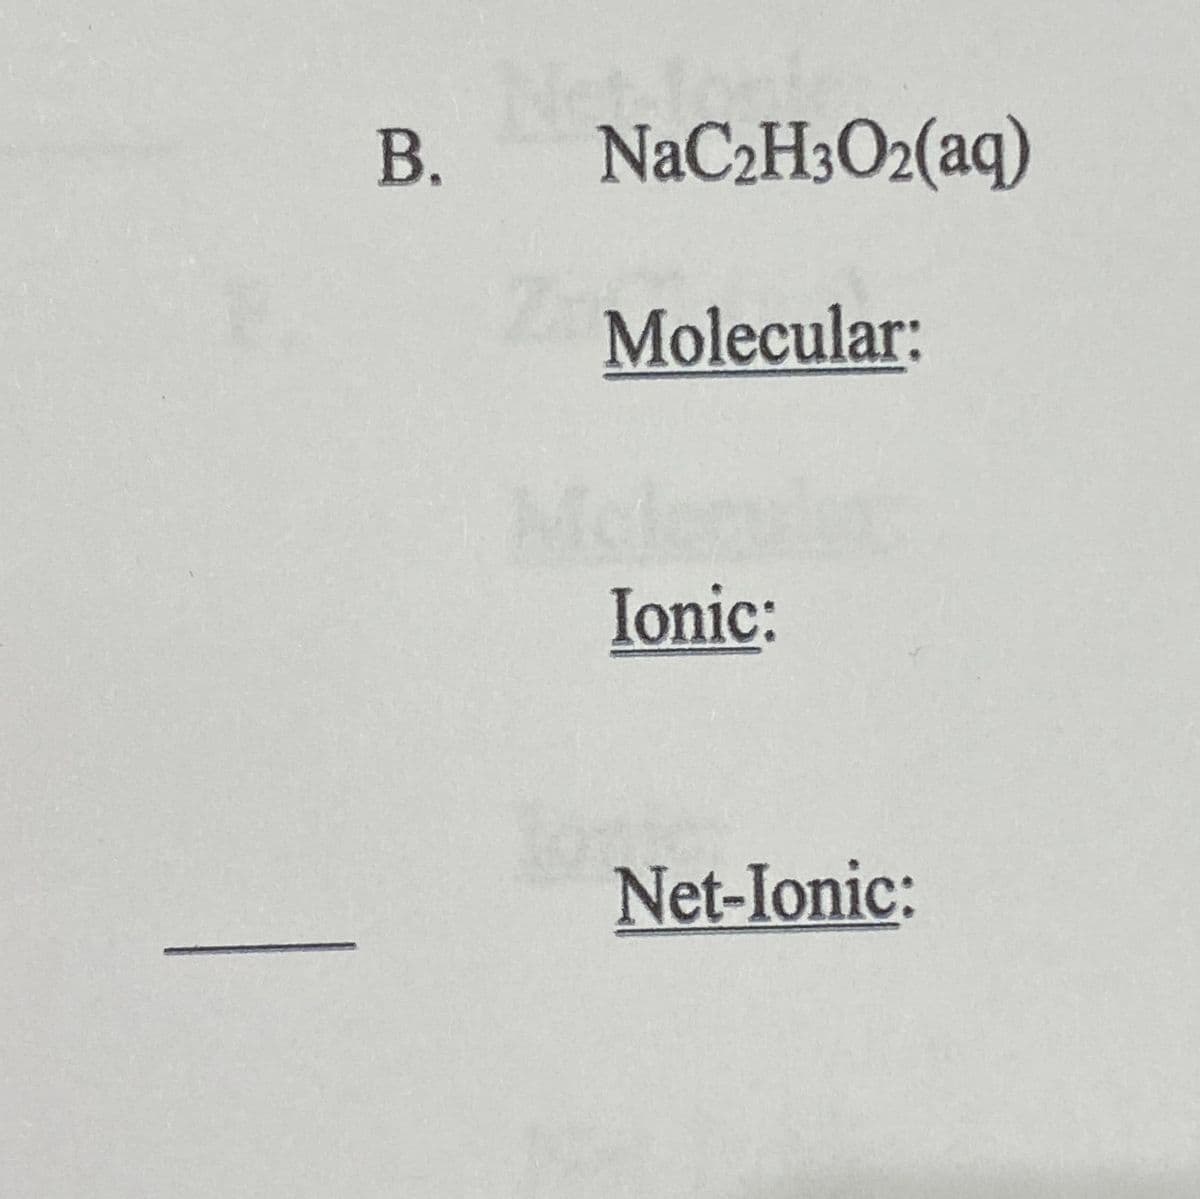 NaC2H3O2(aq)
Molecular:
Ionic:
Net-Ionic:
B.
